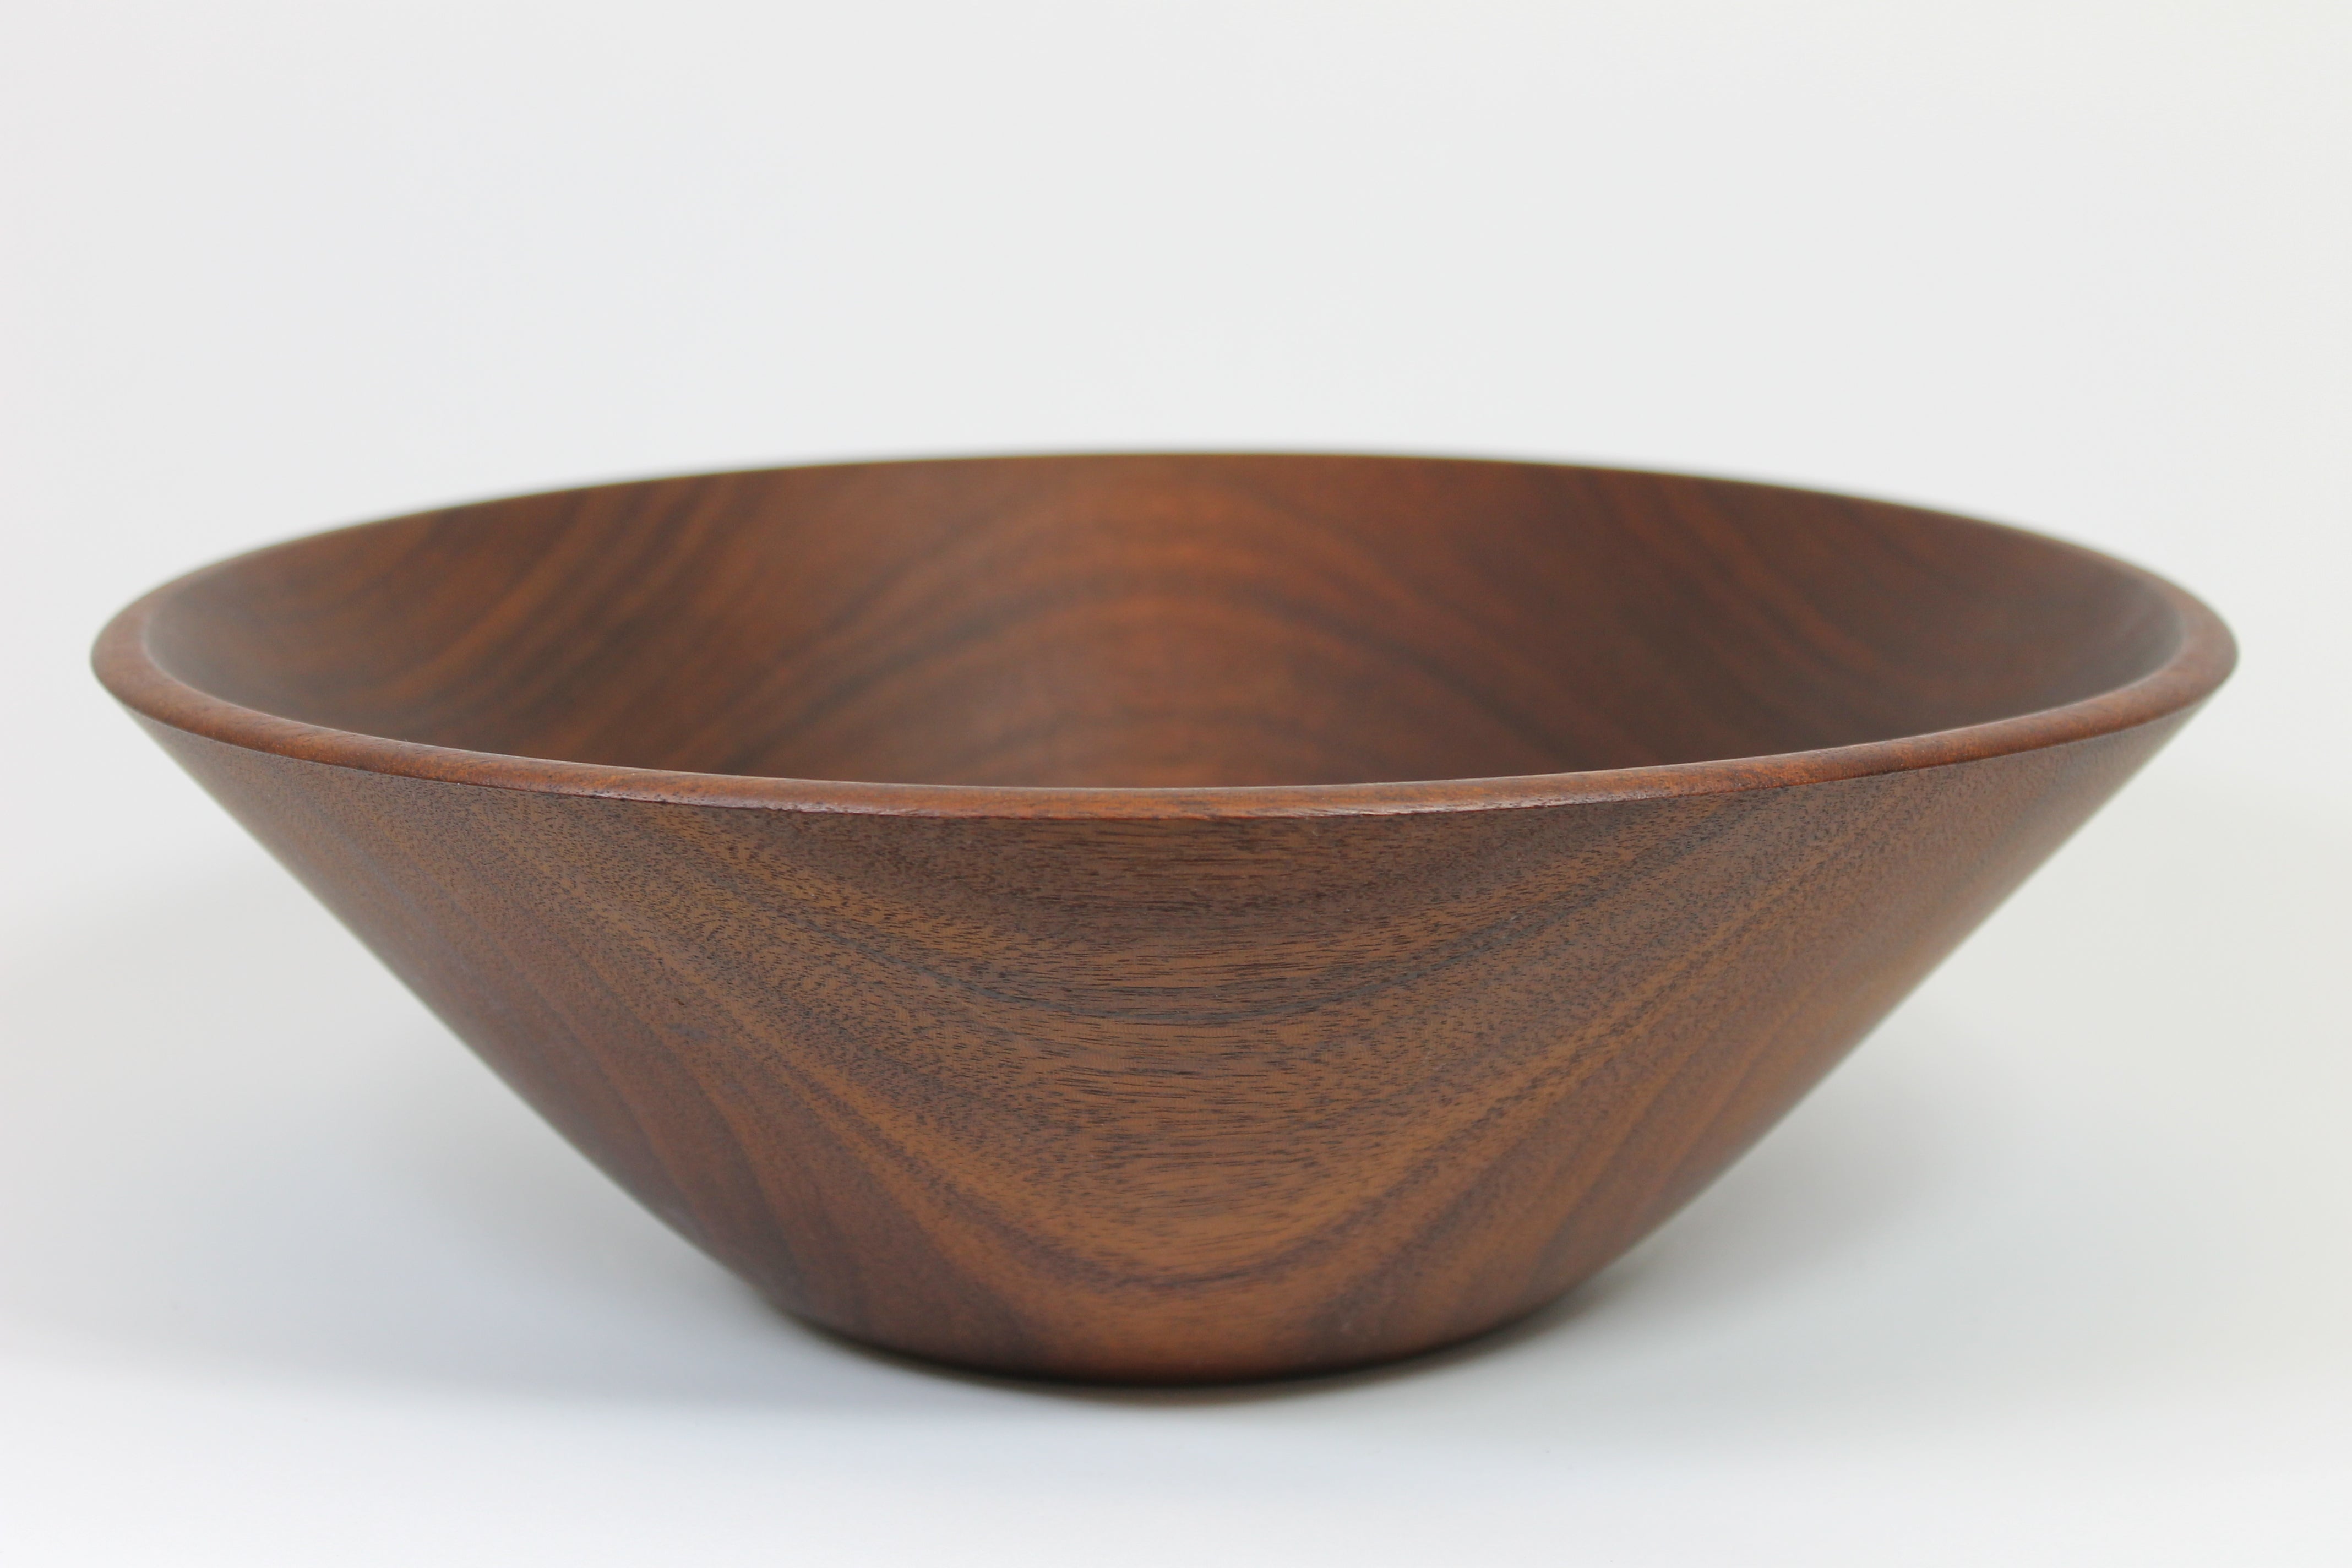 Turned Guatamalian Mahogany bowl by Robert Stocksdale For Sale